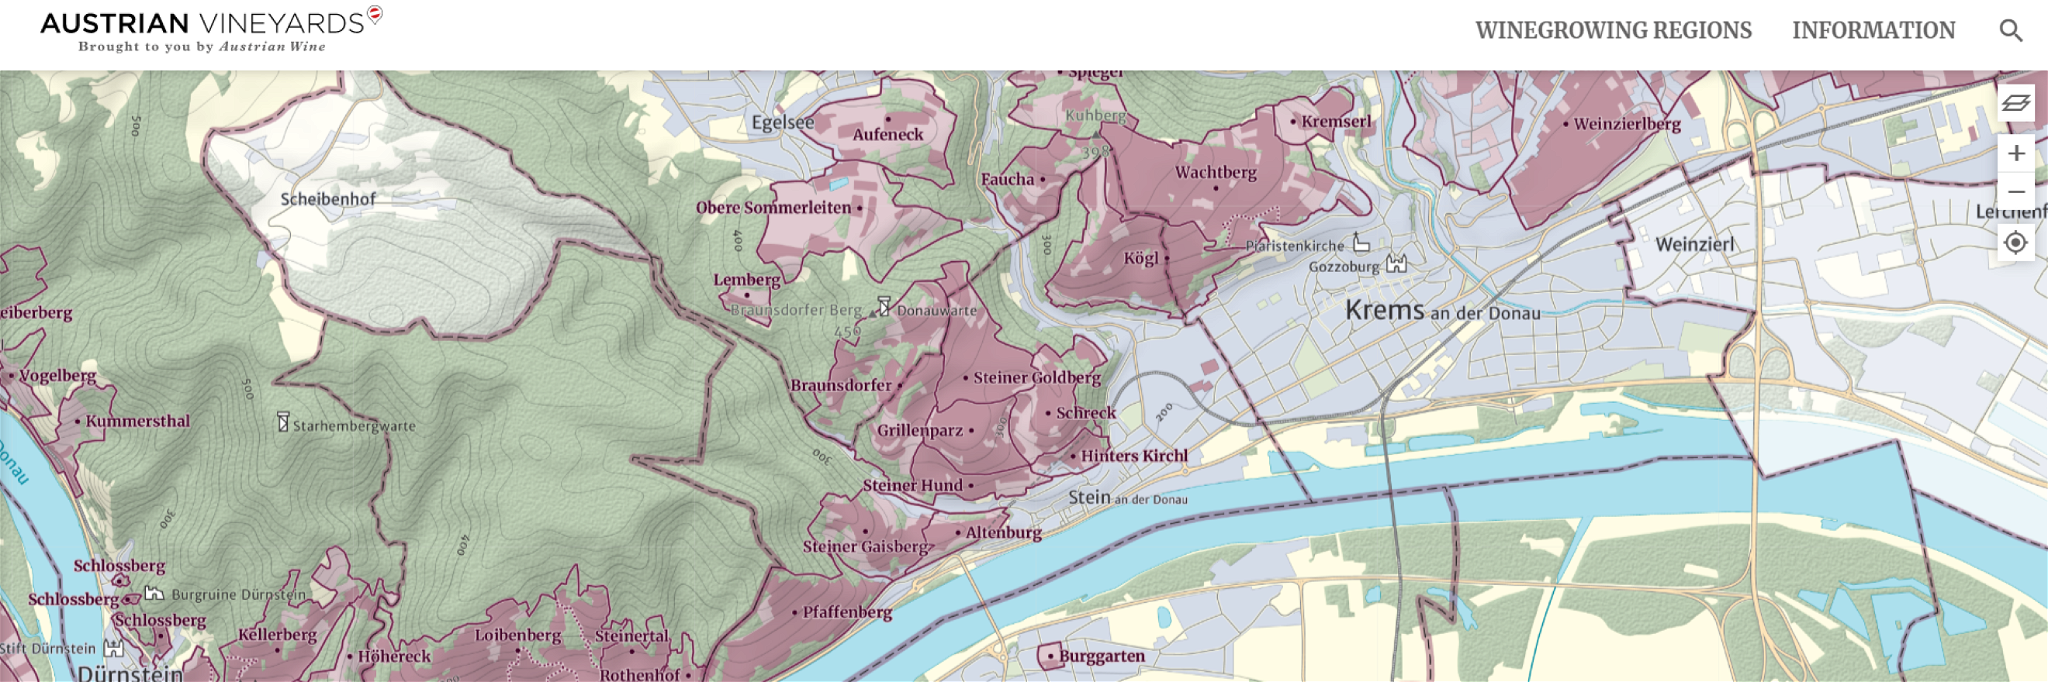 Austria's Digital Vineyard Map